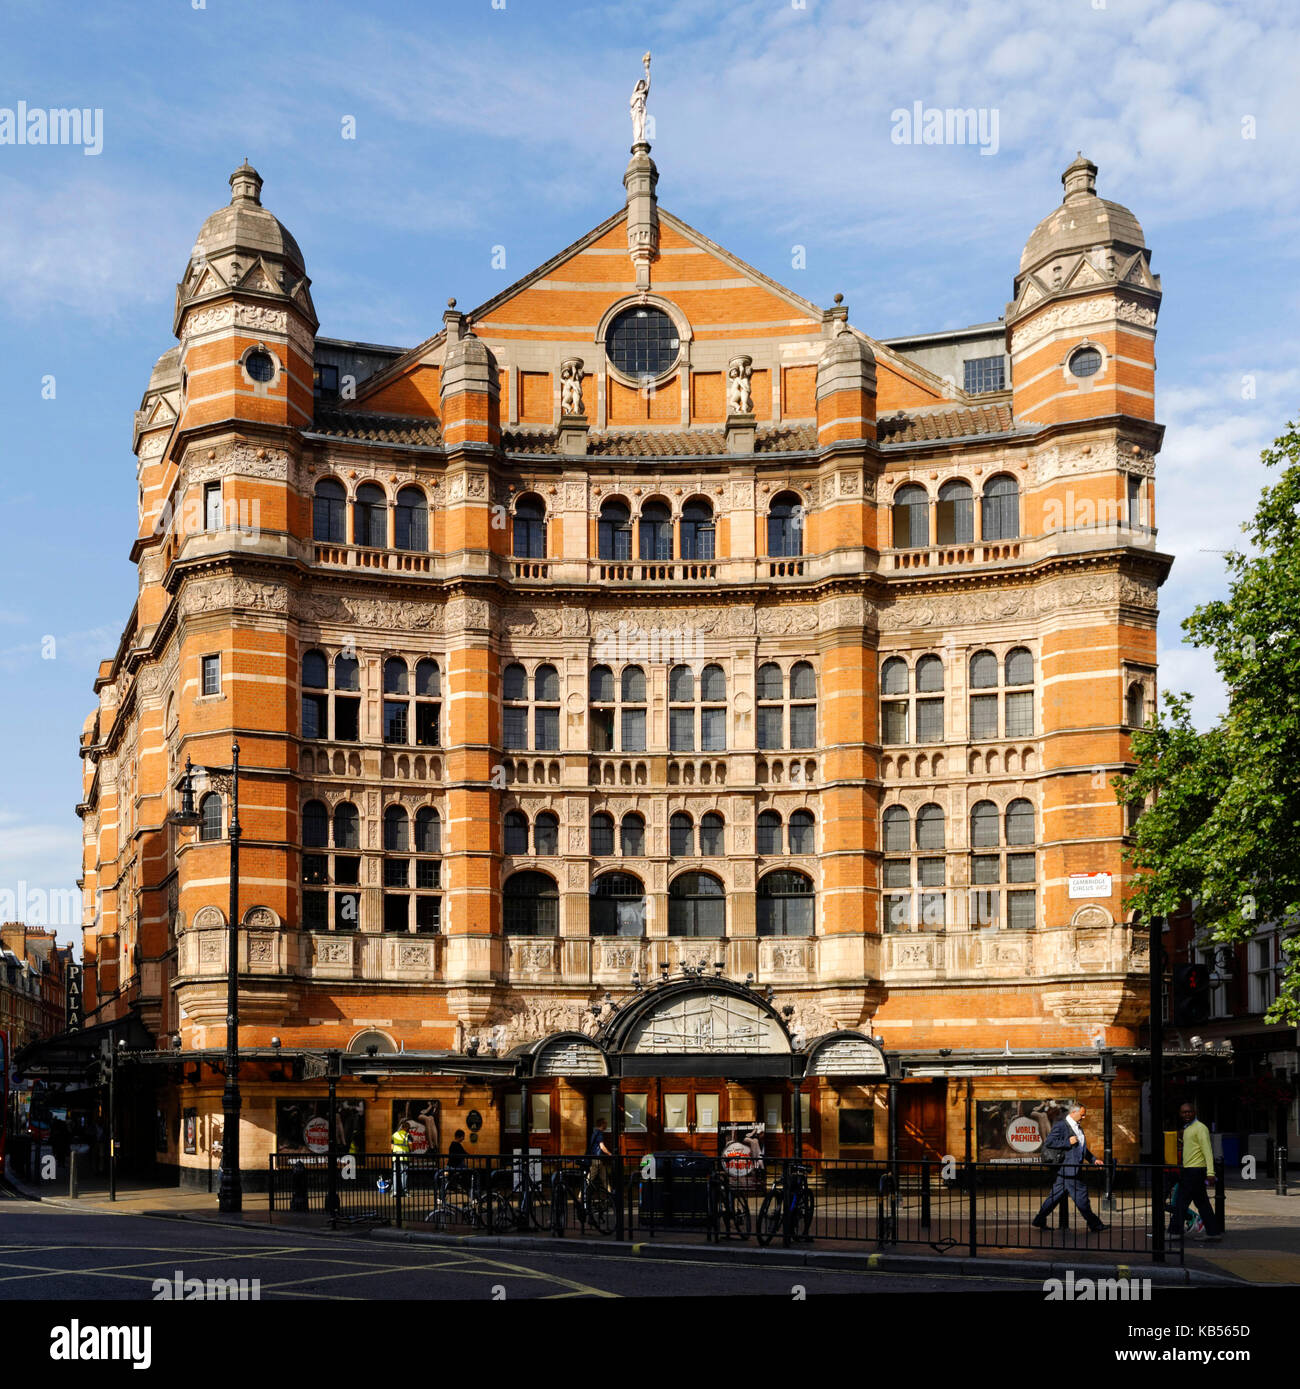 Royaume-uni, Londres, Soho, palace theatre, Shaftesbury ave Banque D'Images